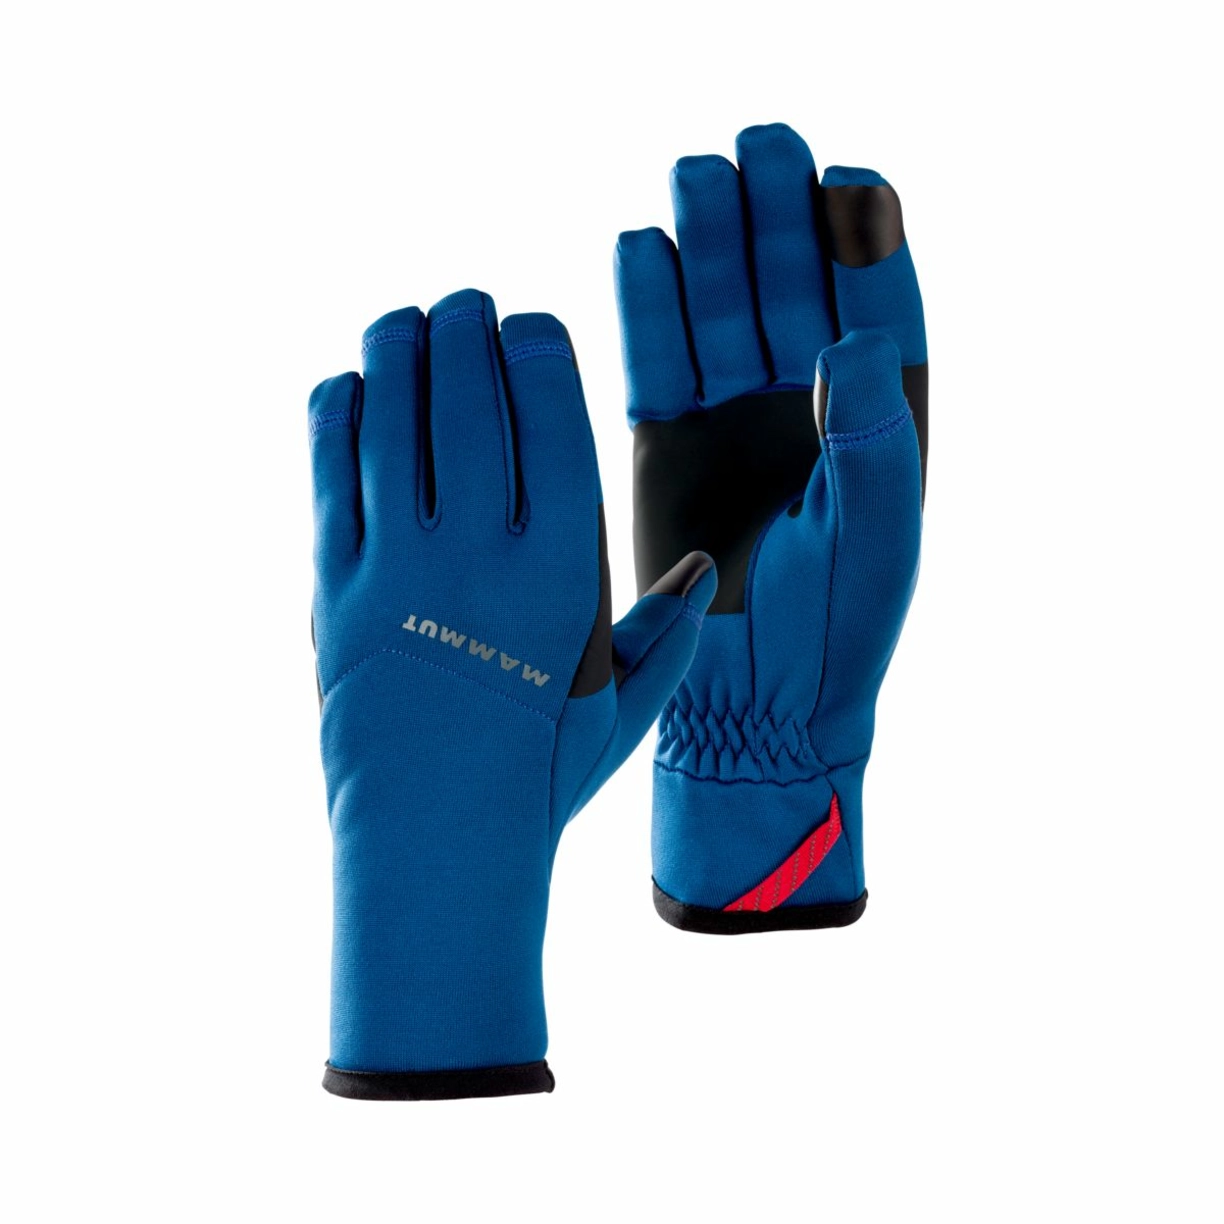 Zdjęcie 0 produktu Fleece Pro Glove ultramarine.6